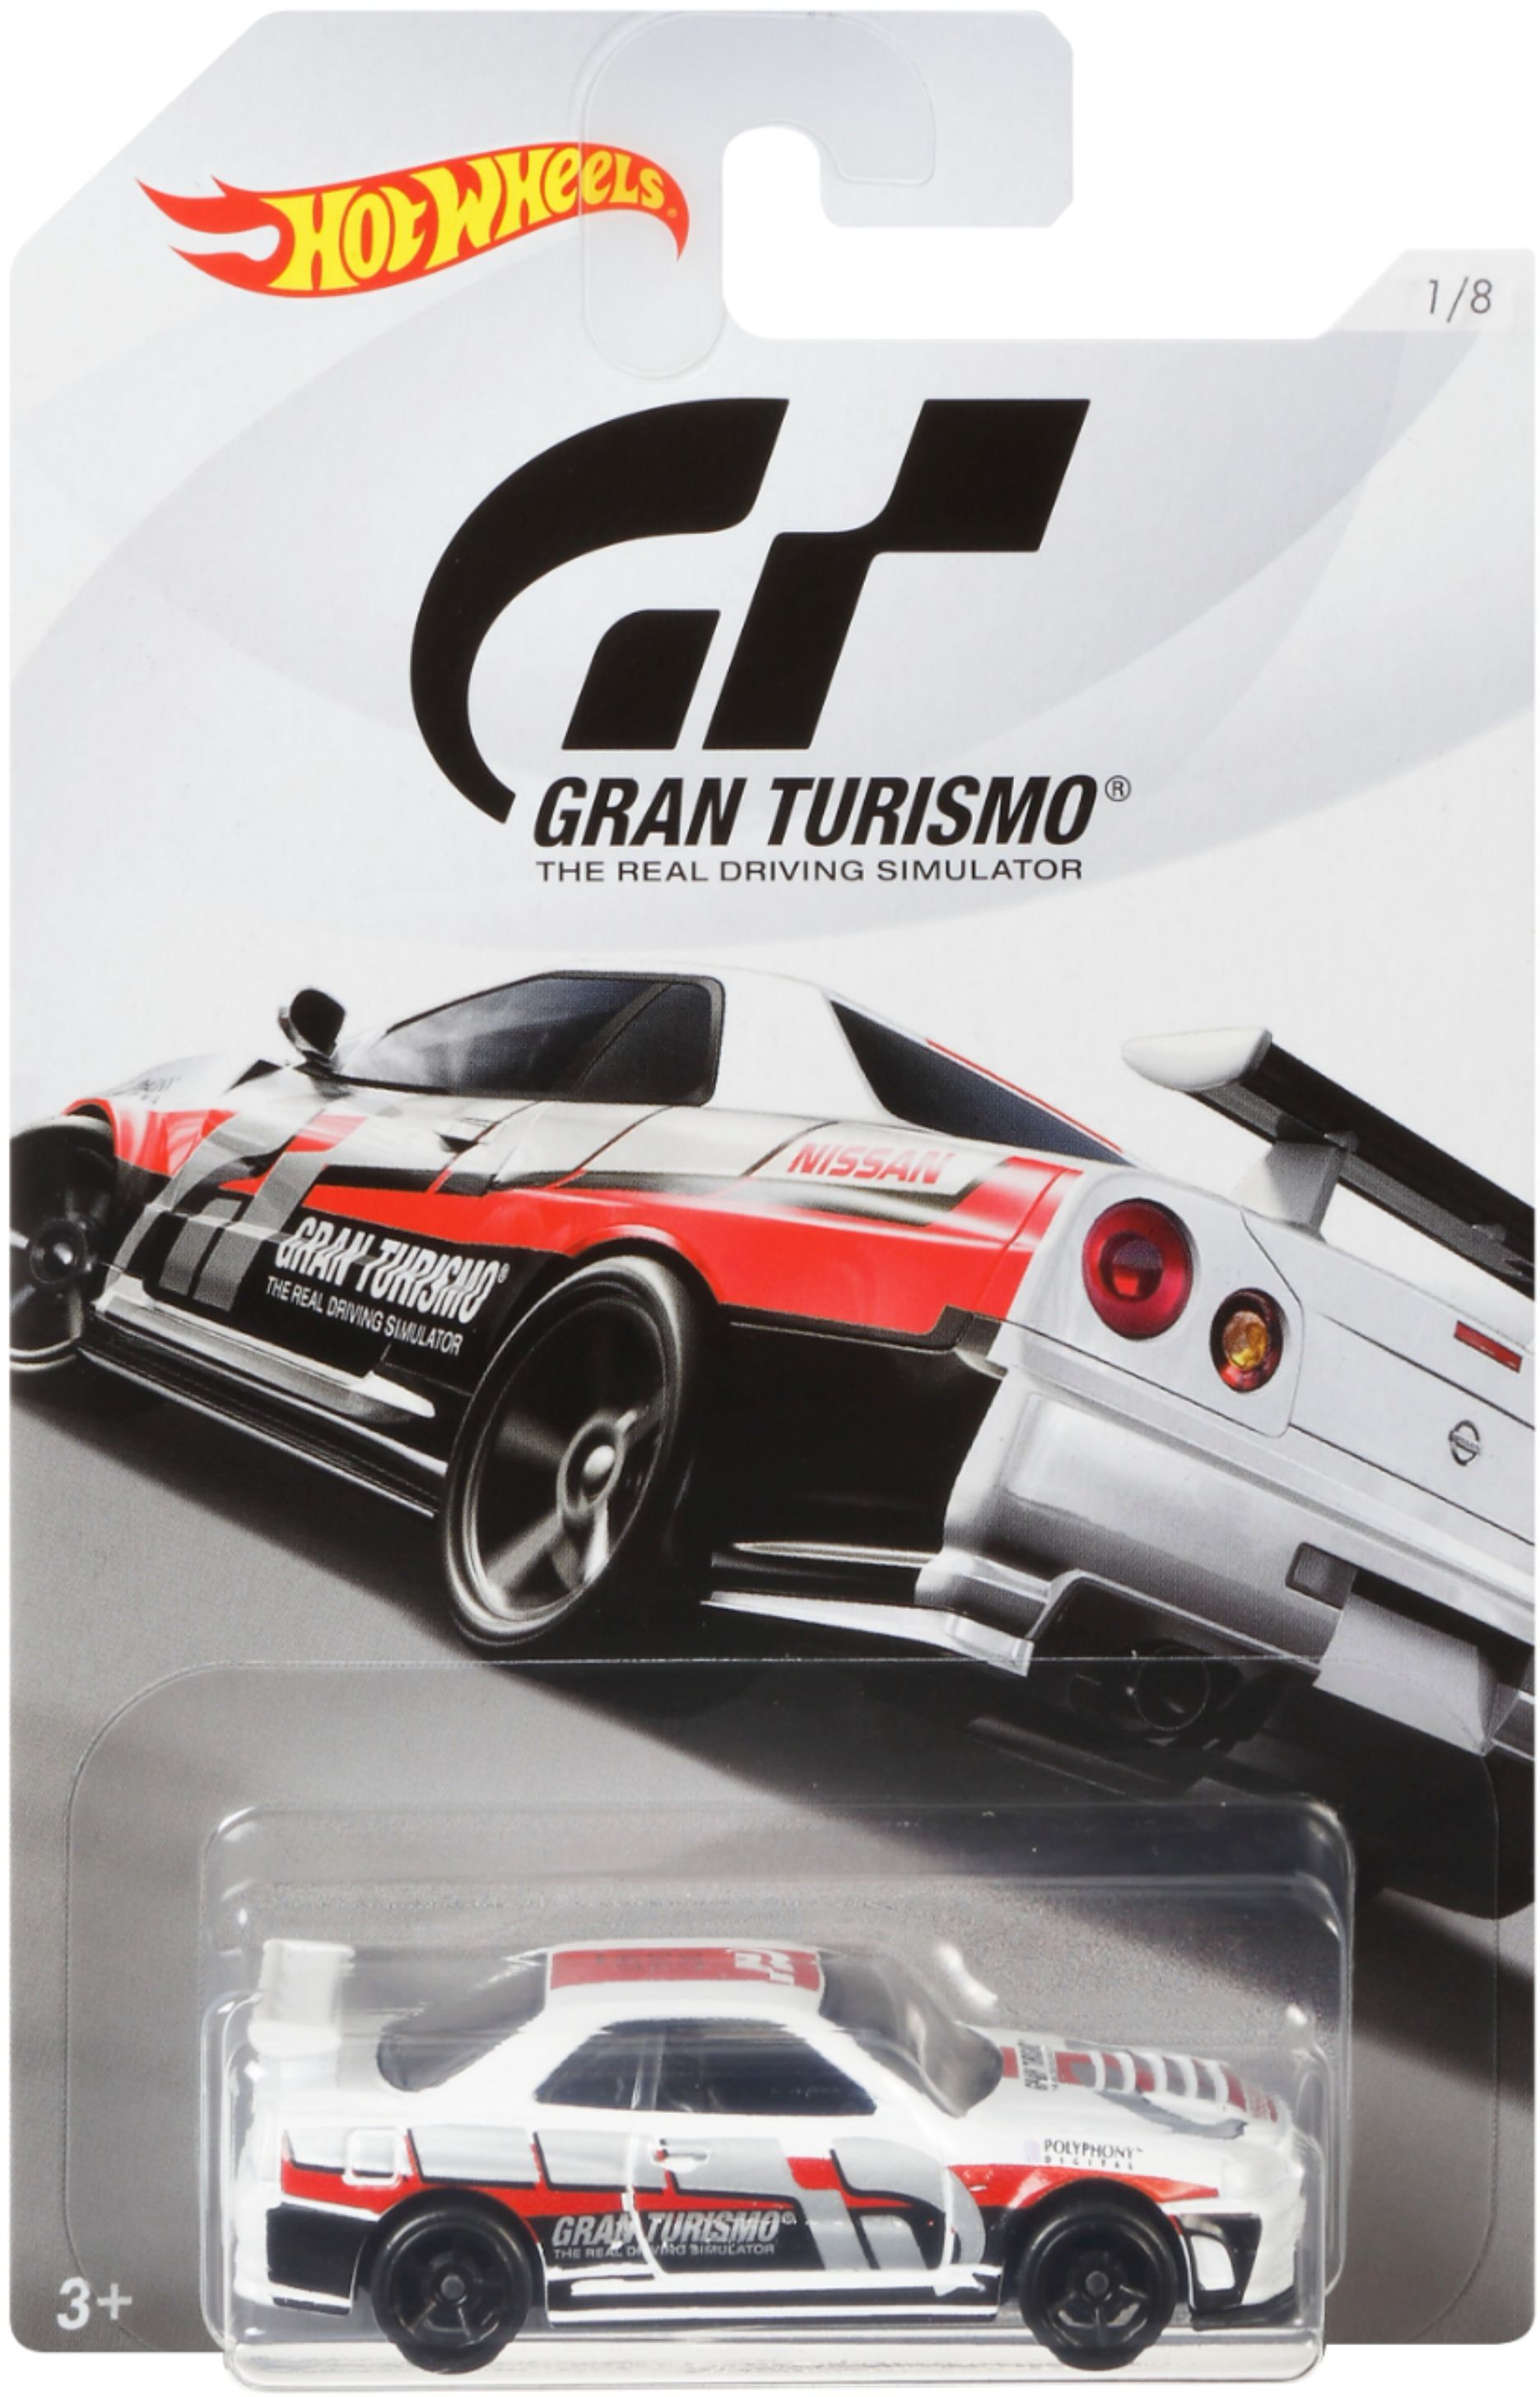 Hot Wheels Gran Turismo Series 2 1:64 Scale Die-cast Car Choose from 8 models 